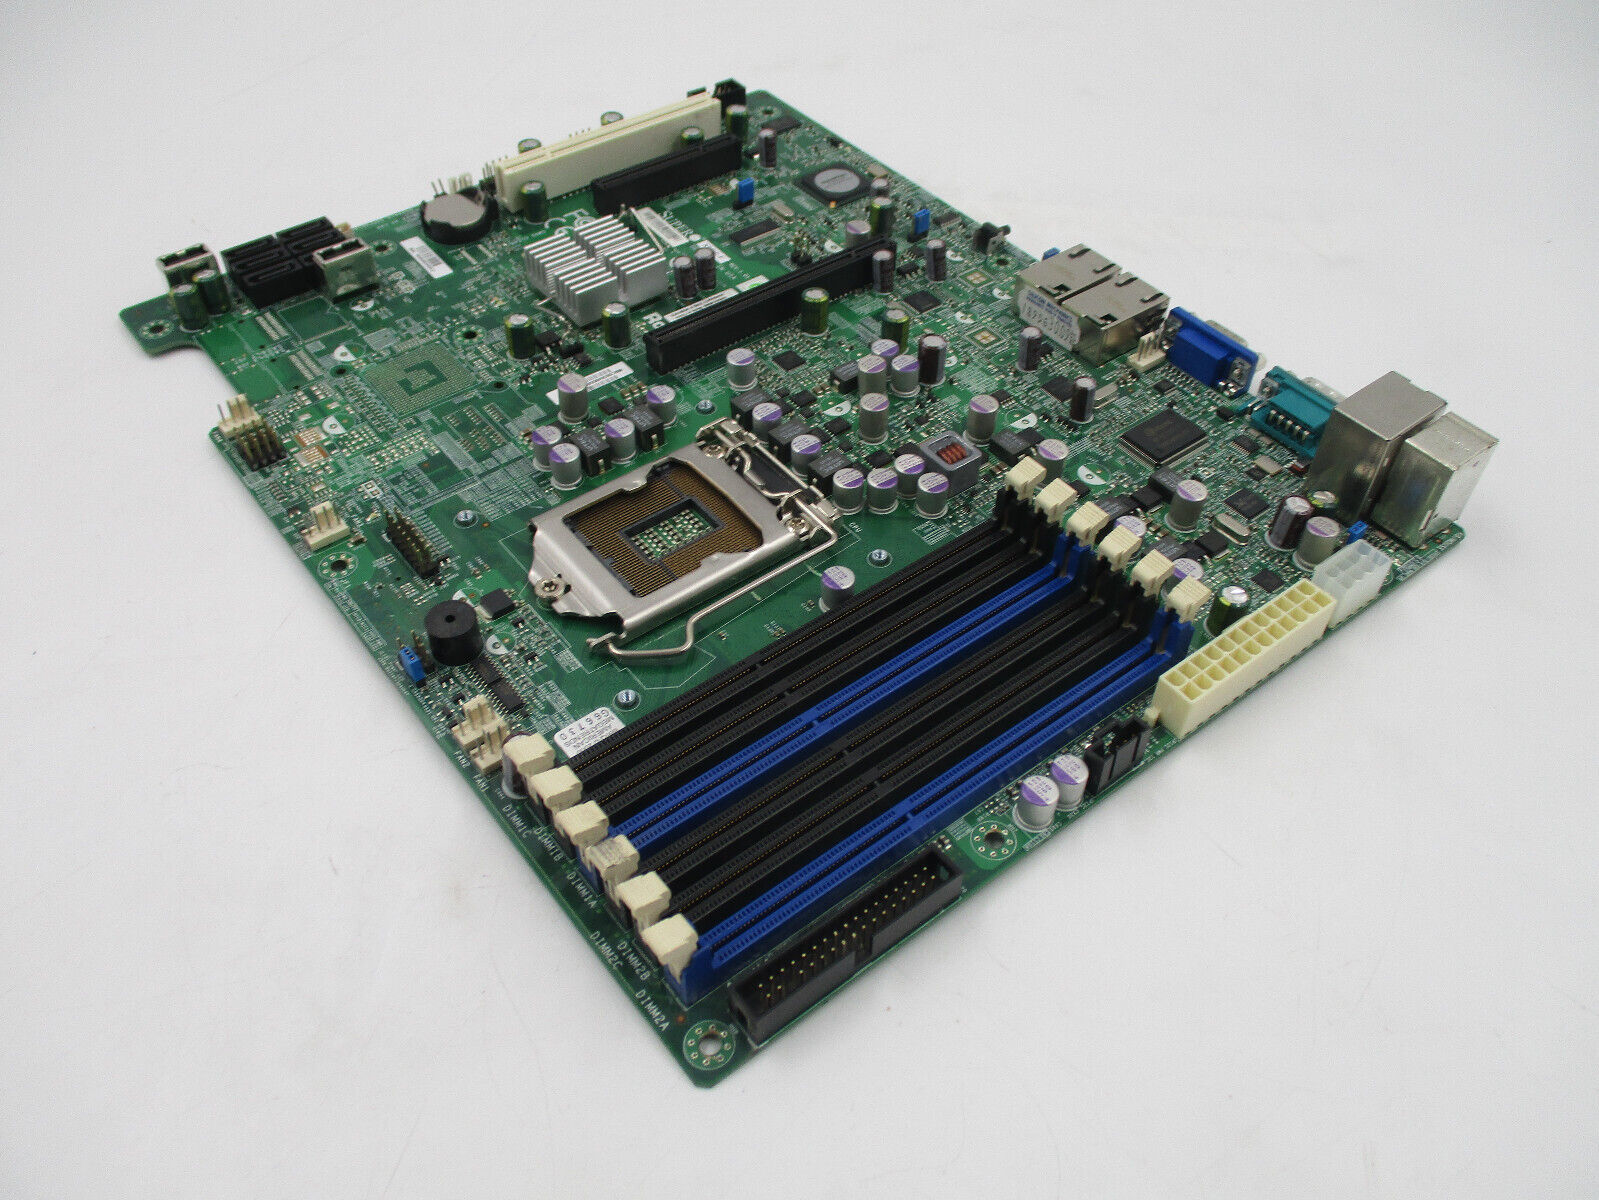 Supermicro X8SIE-F Server LGA 1156 Socket DDR3 Motherboard Tested Working